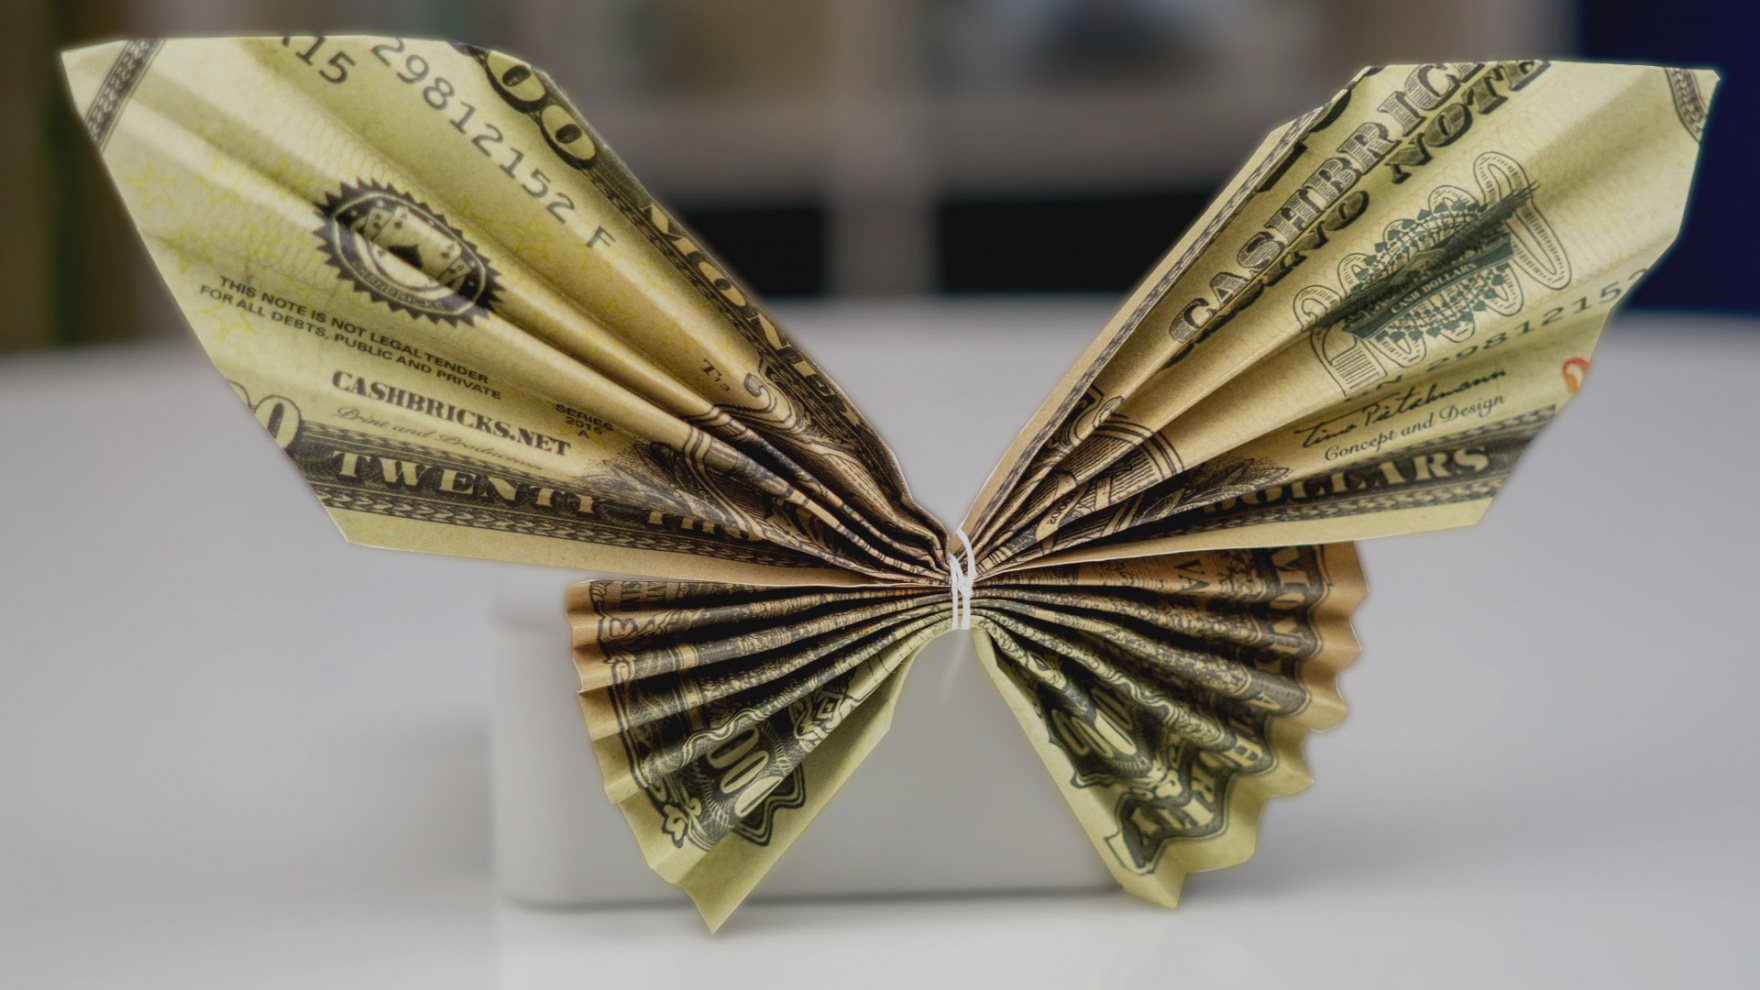 Origami Money Folding Instructions Unique Origami Money Butterfly Gift Idea Dollar Bill Tutorial Easy